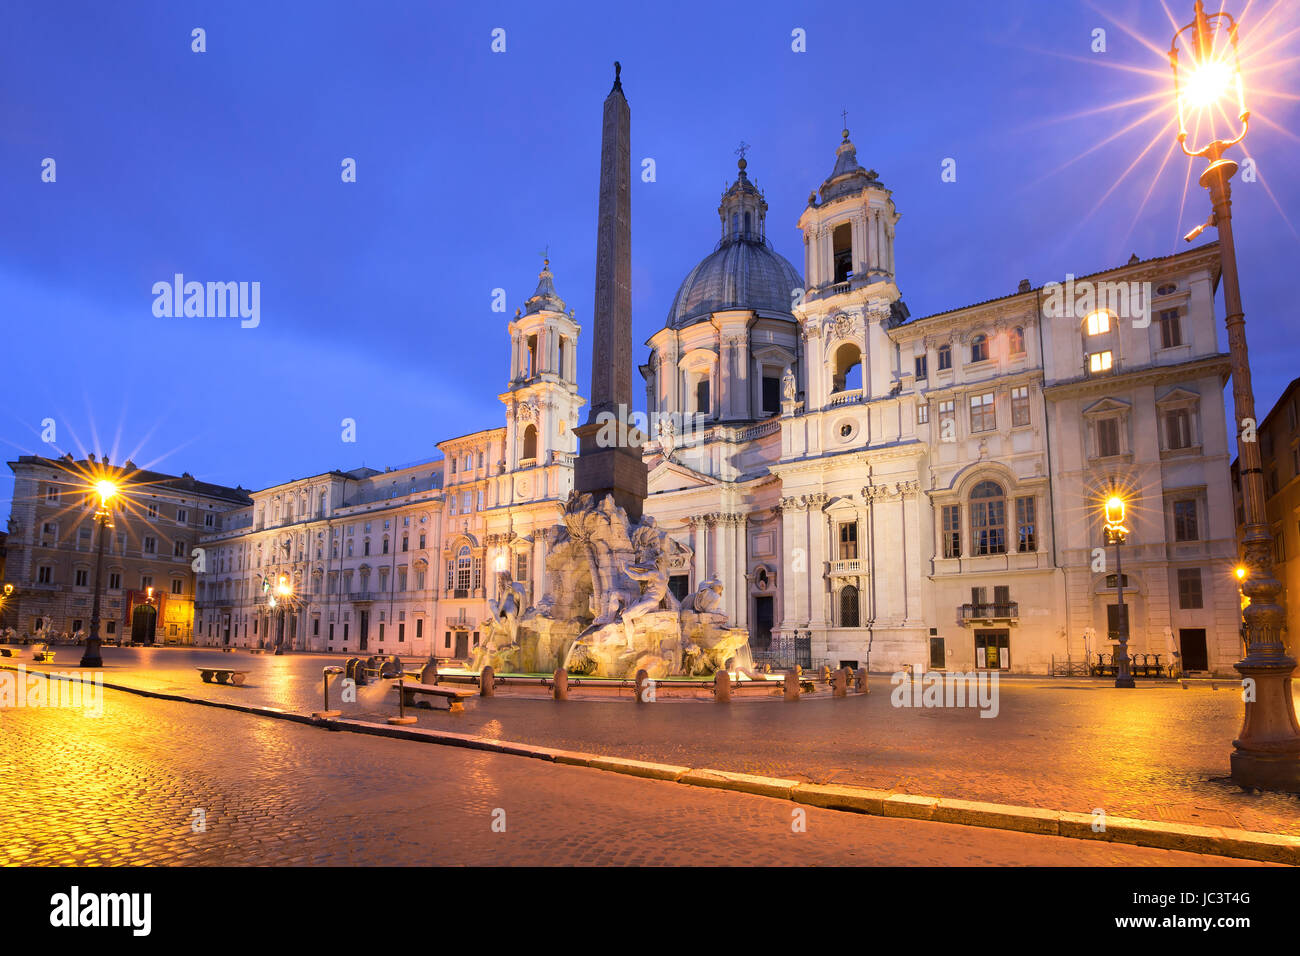 Piazza Navona Square at night, Rome, Italy. Stock Photo